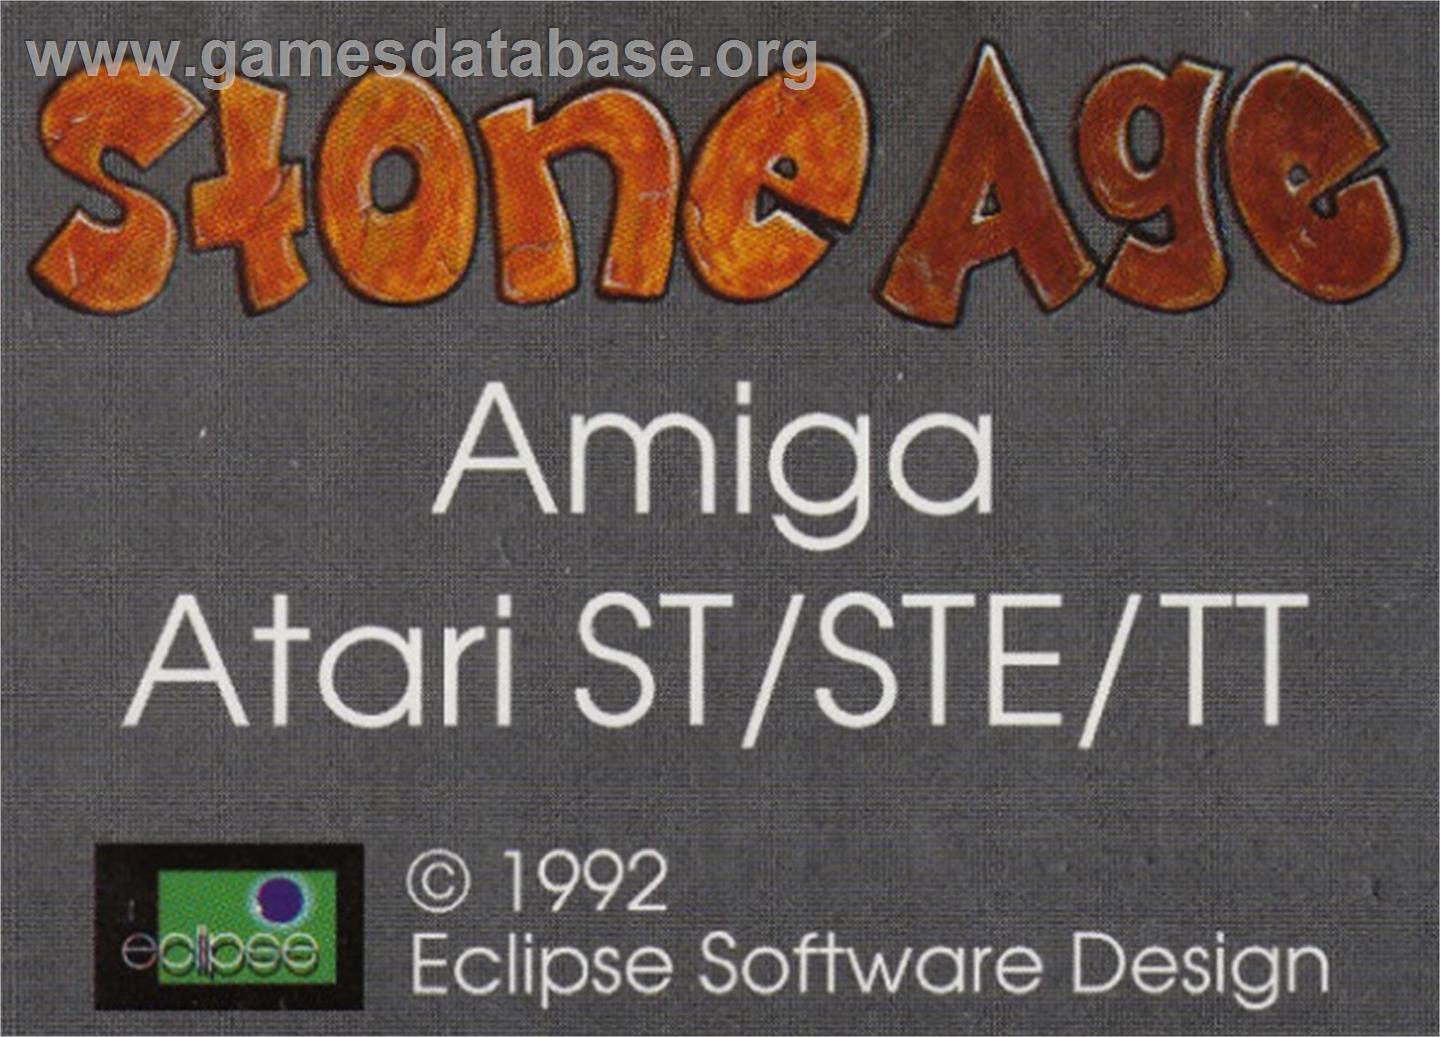 Stoneage - Atari ST - Artwork - Cartridge Top